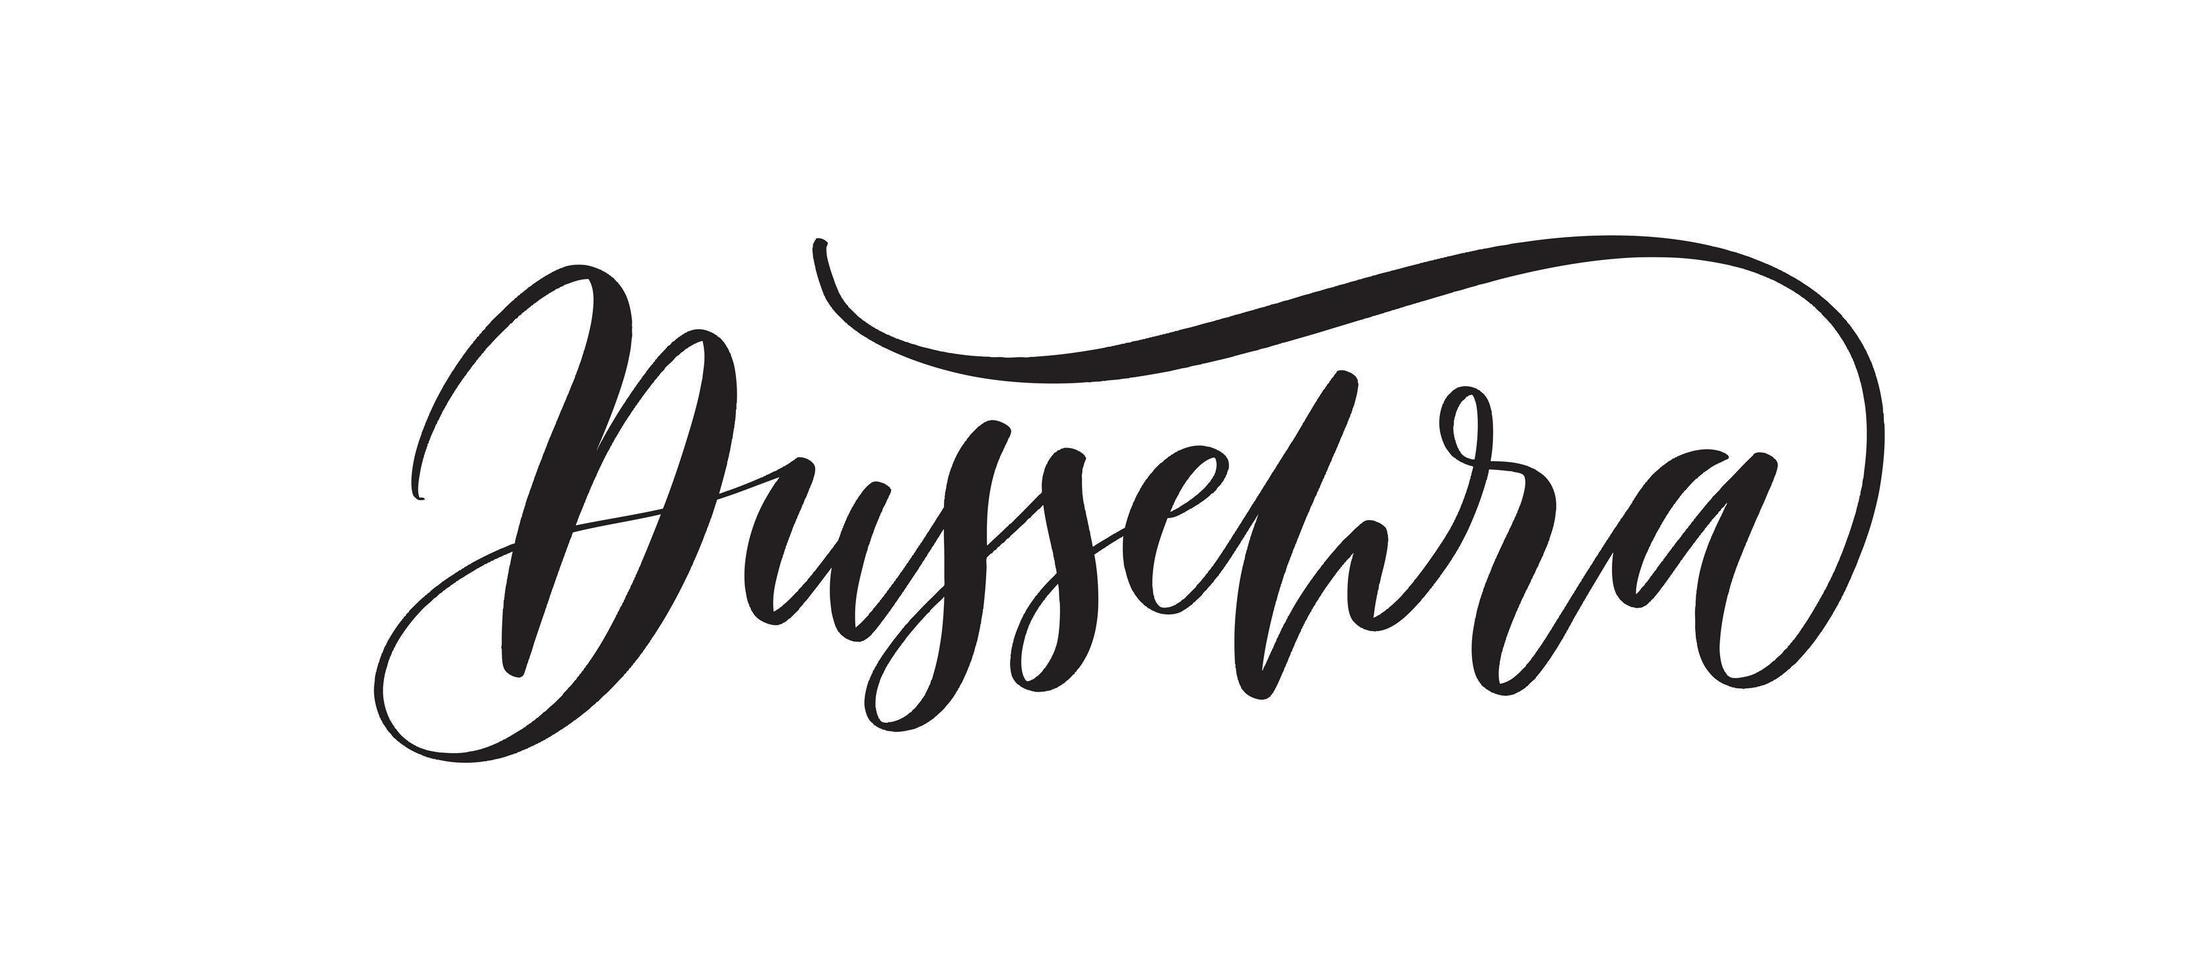 dussehra - typografi bokstäver citat, borsta kalligrafi banner med tunn linje. vektor